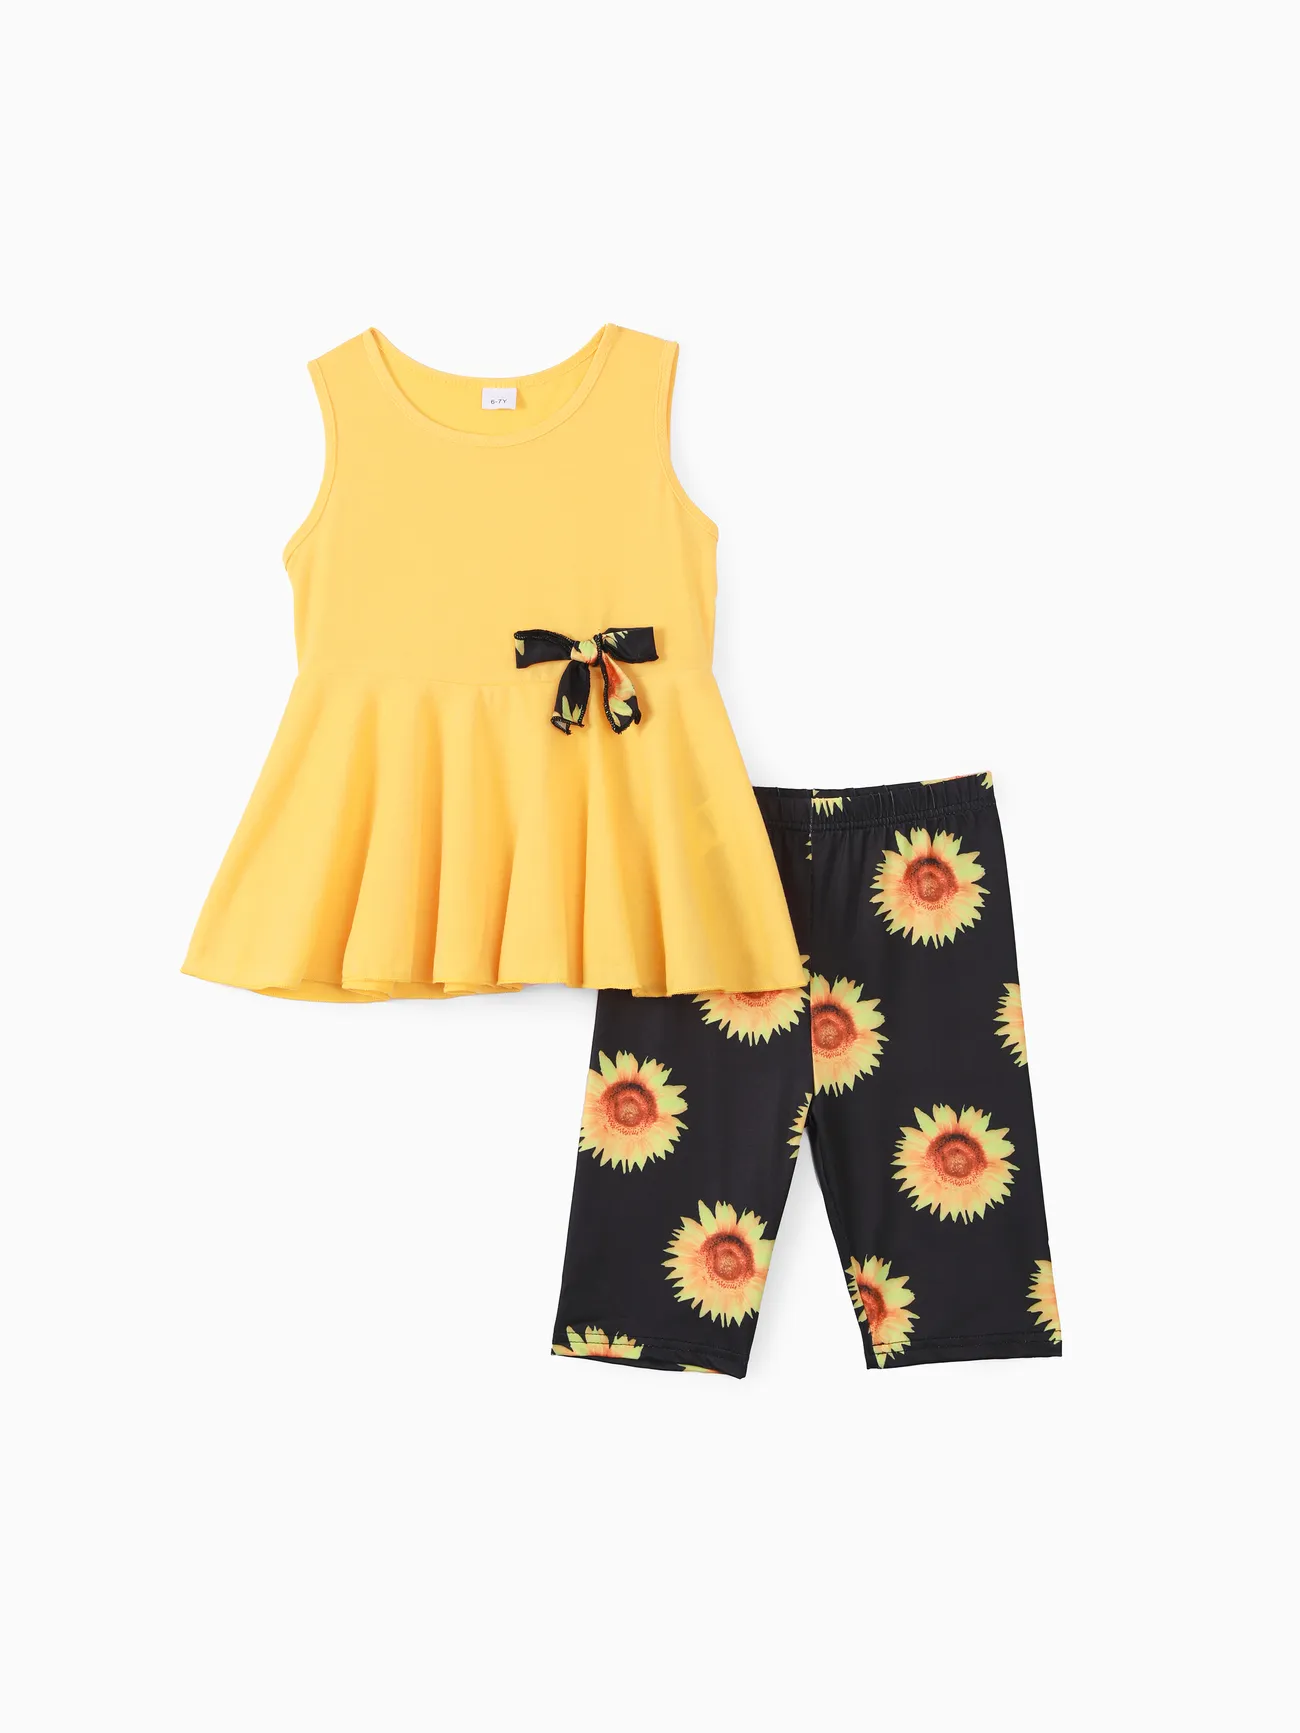 Kid Girl 2pcs Sweet Sleeveless Top and Floral Print Leggings Set Yellow big image 1